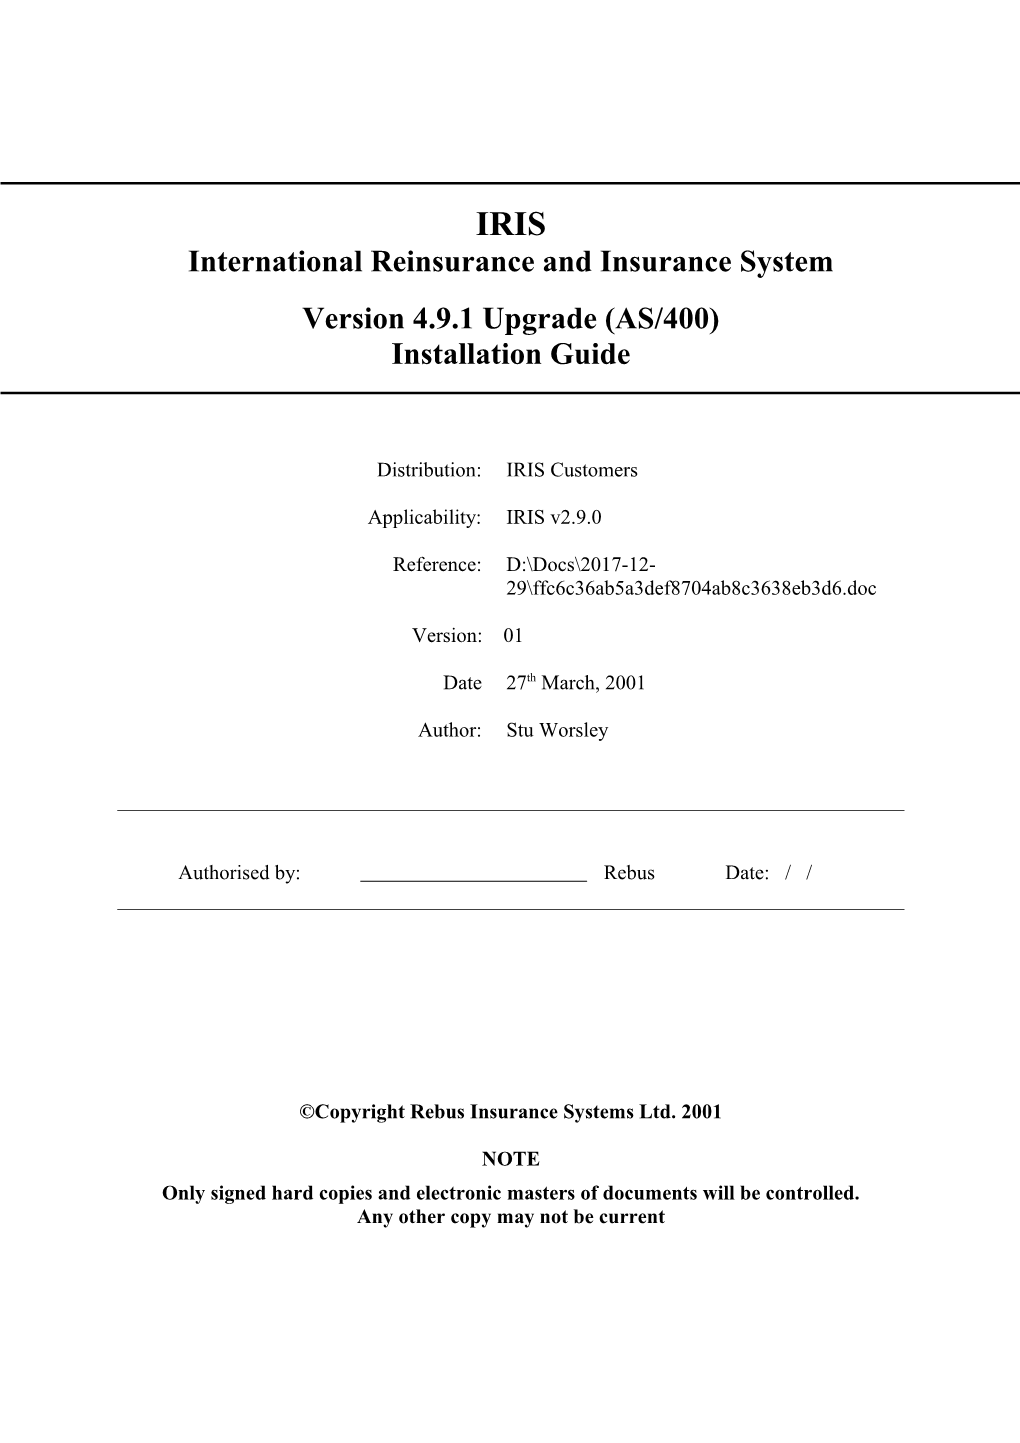 IRIS - Version 2.9.0 - Upgrade Installation Guide